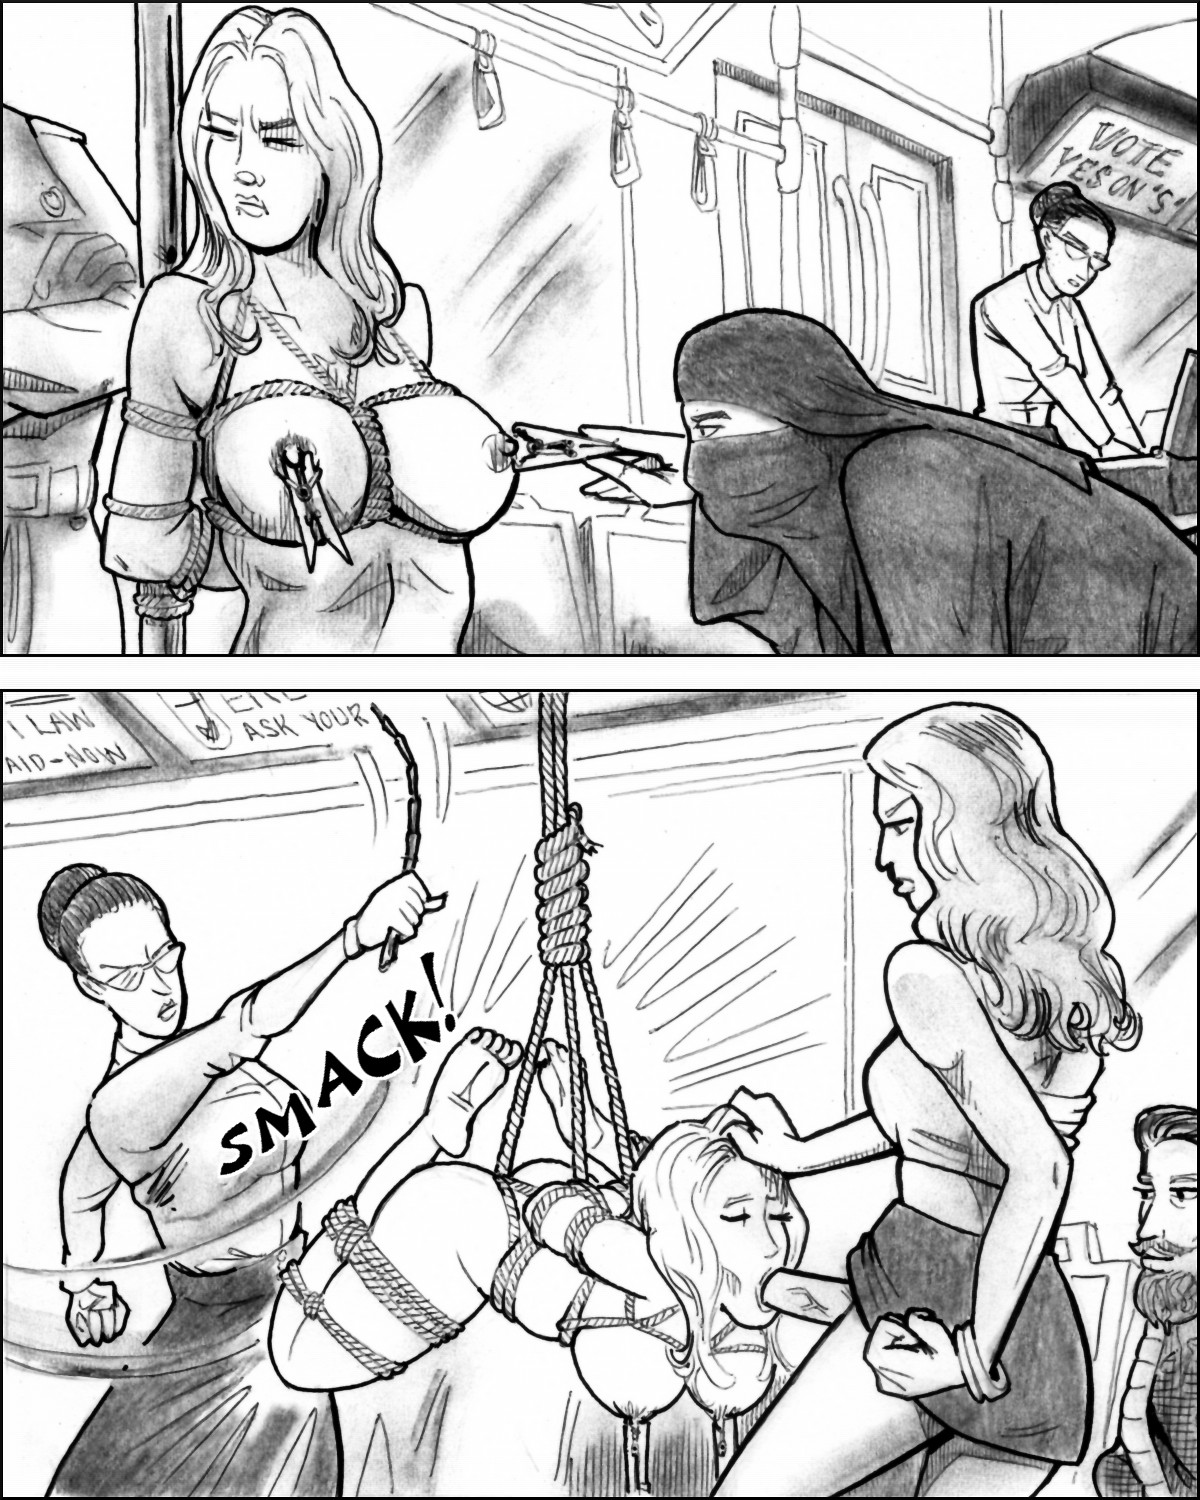 Kat in a BDSM subway scene with a burka woman and shibari suspension bondage.